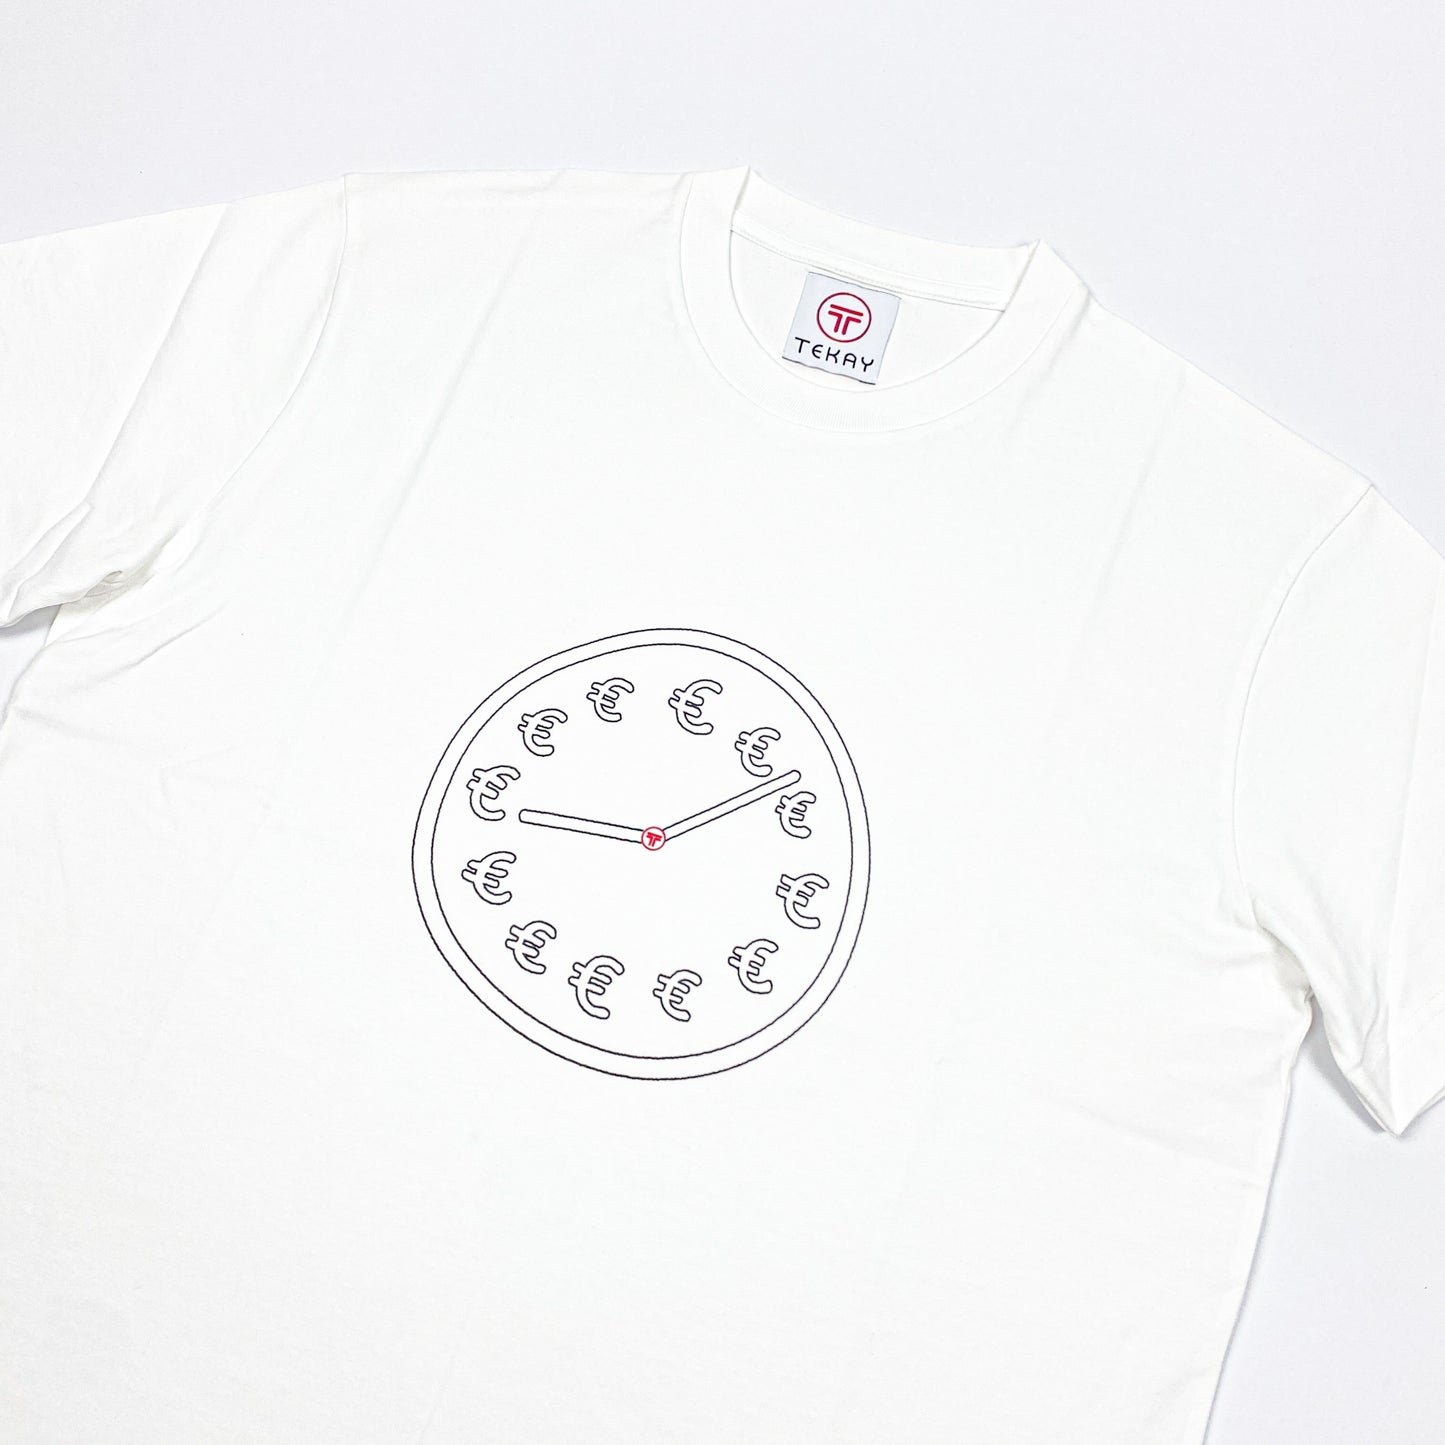 €LOCK T-Shirt [270gsm]